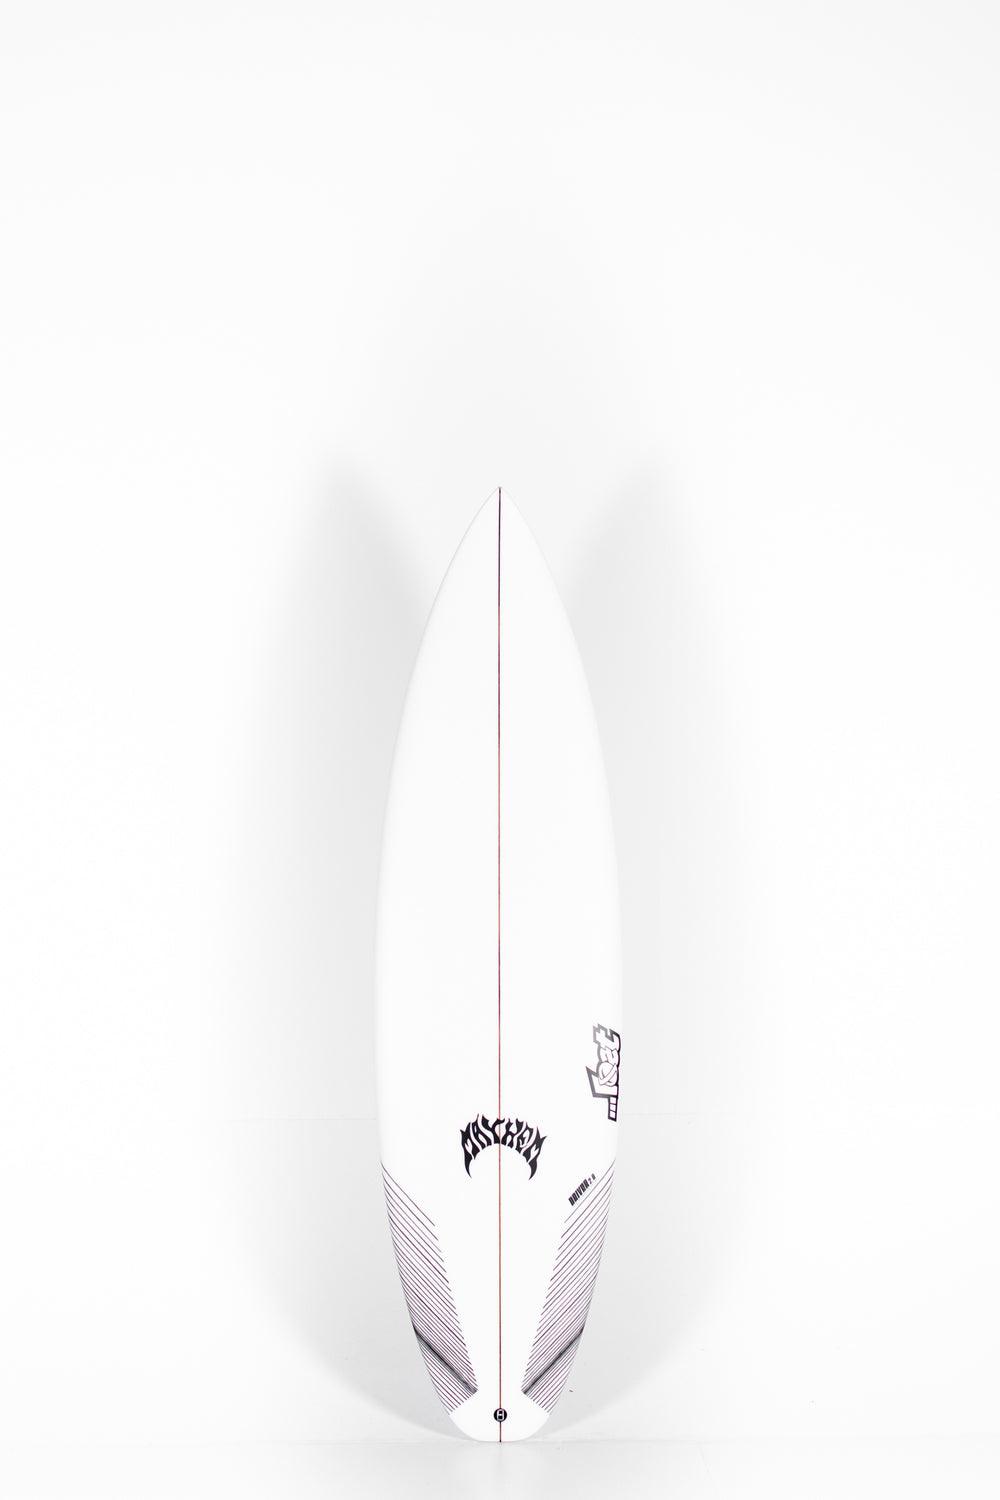 Pukas Surf Shop - Lost Surfboards - DRIVER 2.0 by Matt Biolos - 6’1” x 19,38 x 2,45 - 30,05L - MH12509